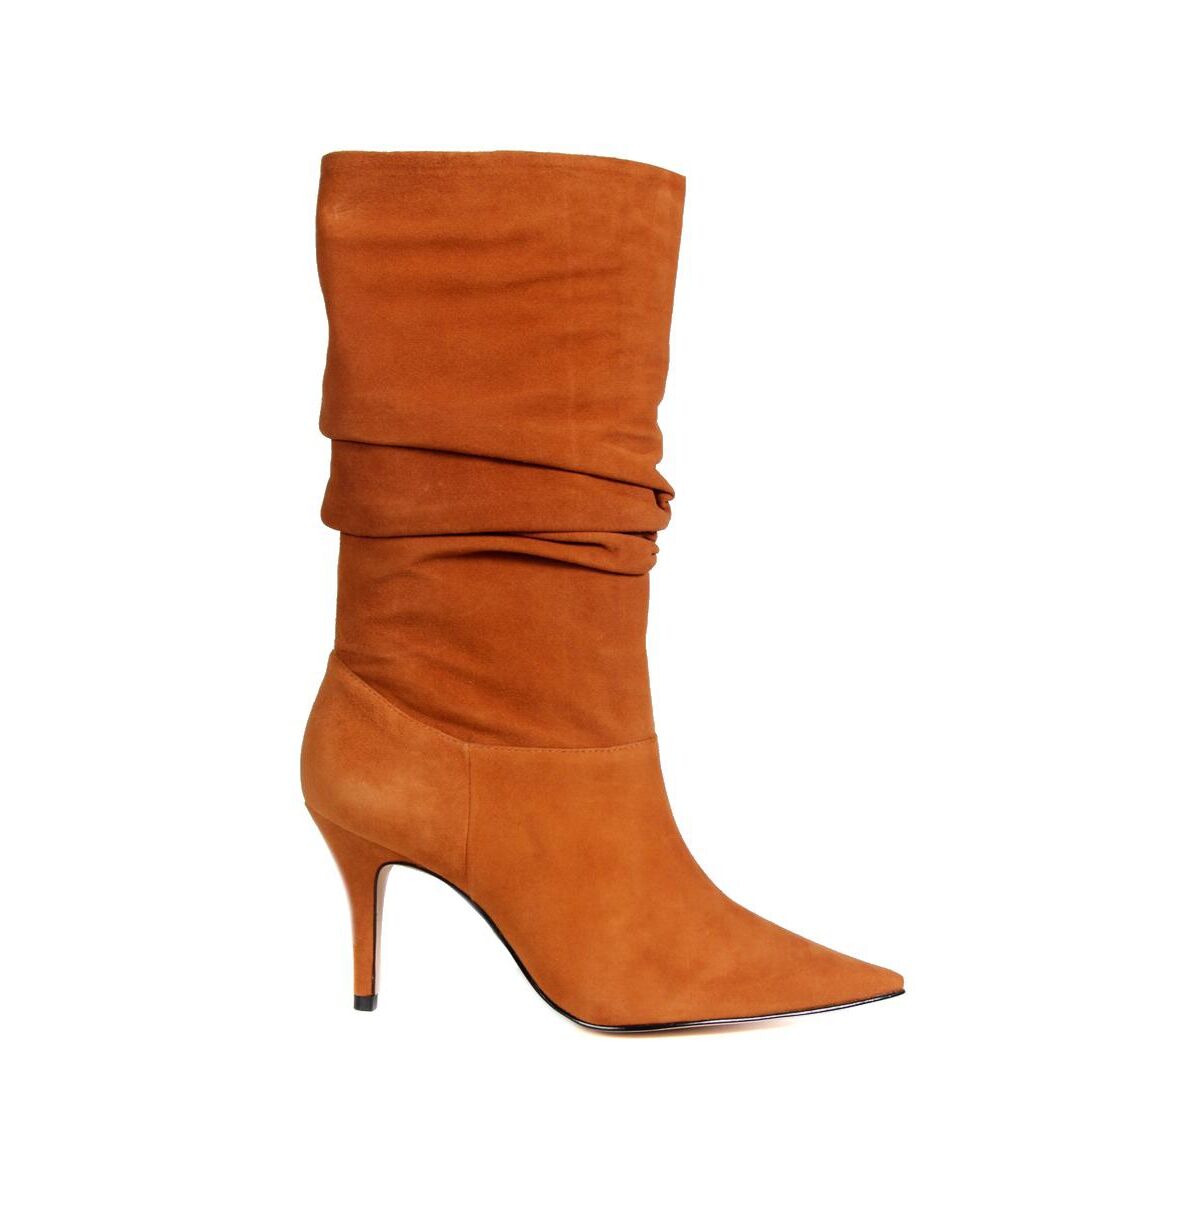 Paula Torres Shoes Women's Carmel Pointed-Toe Dress Boots - Caramel